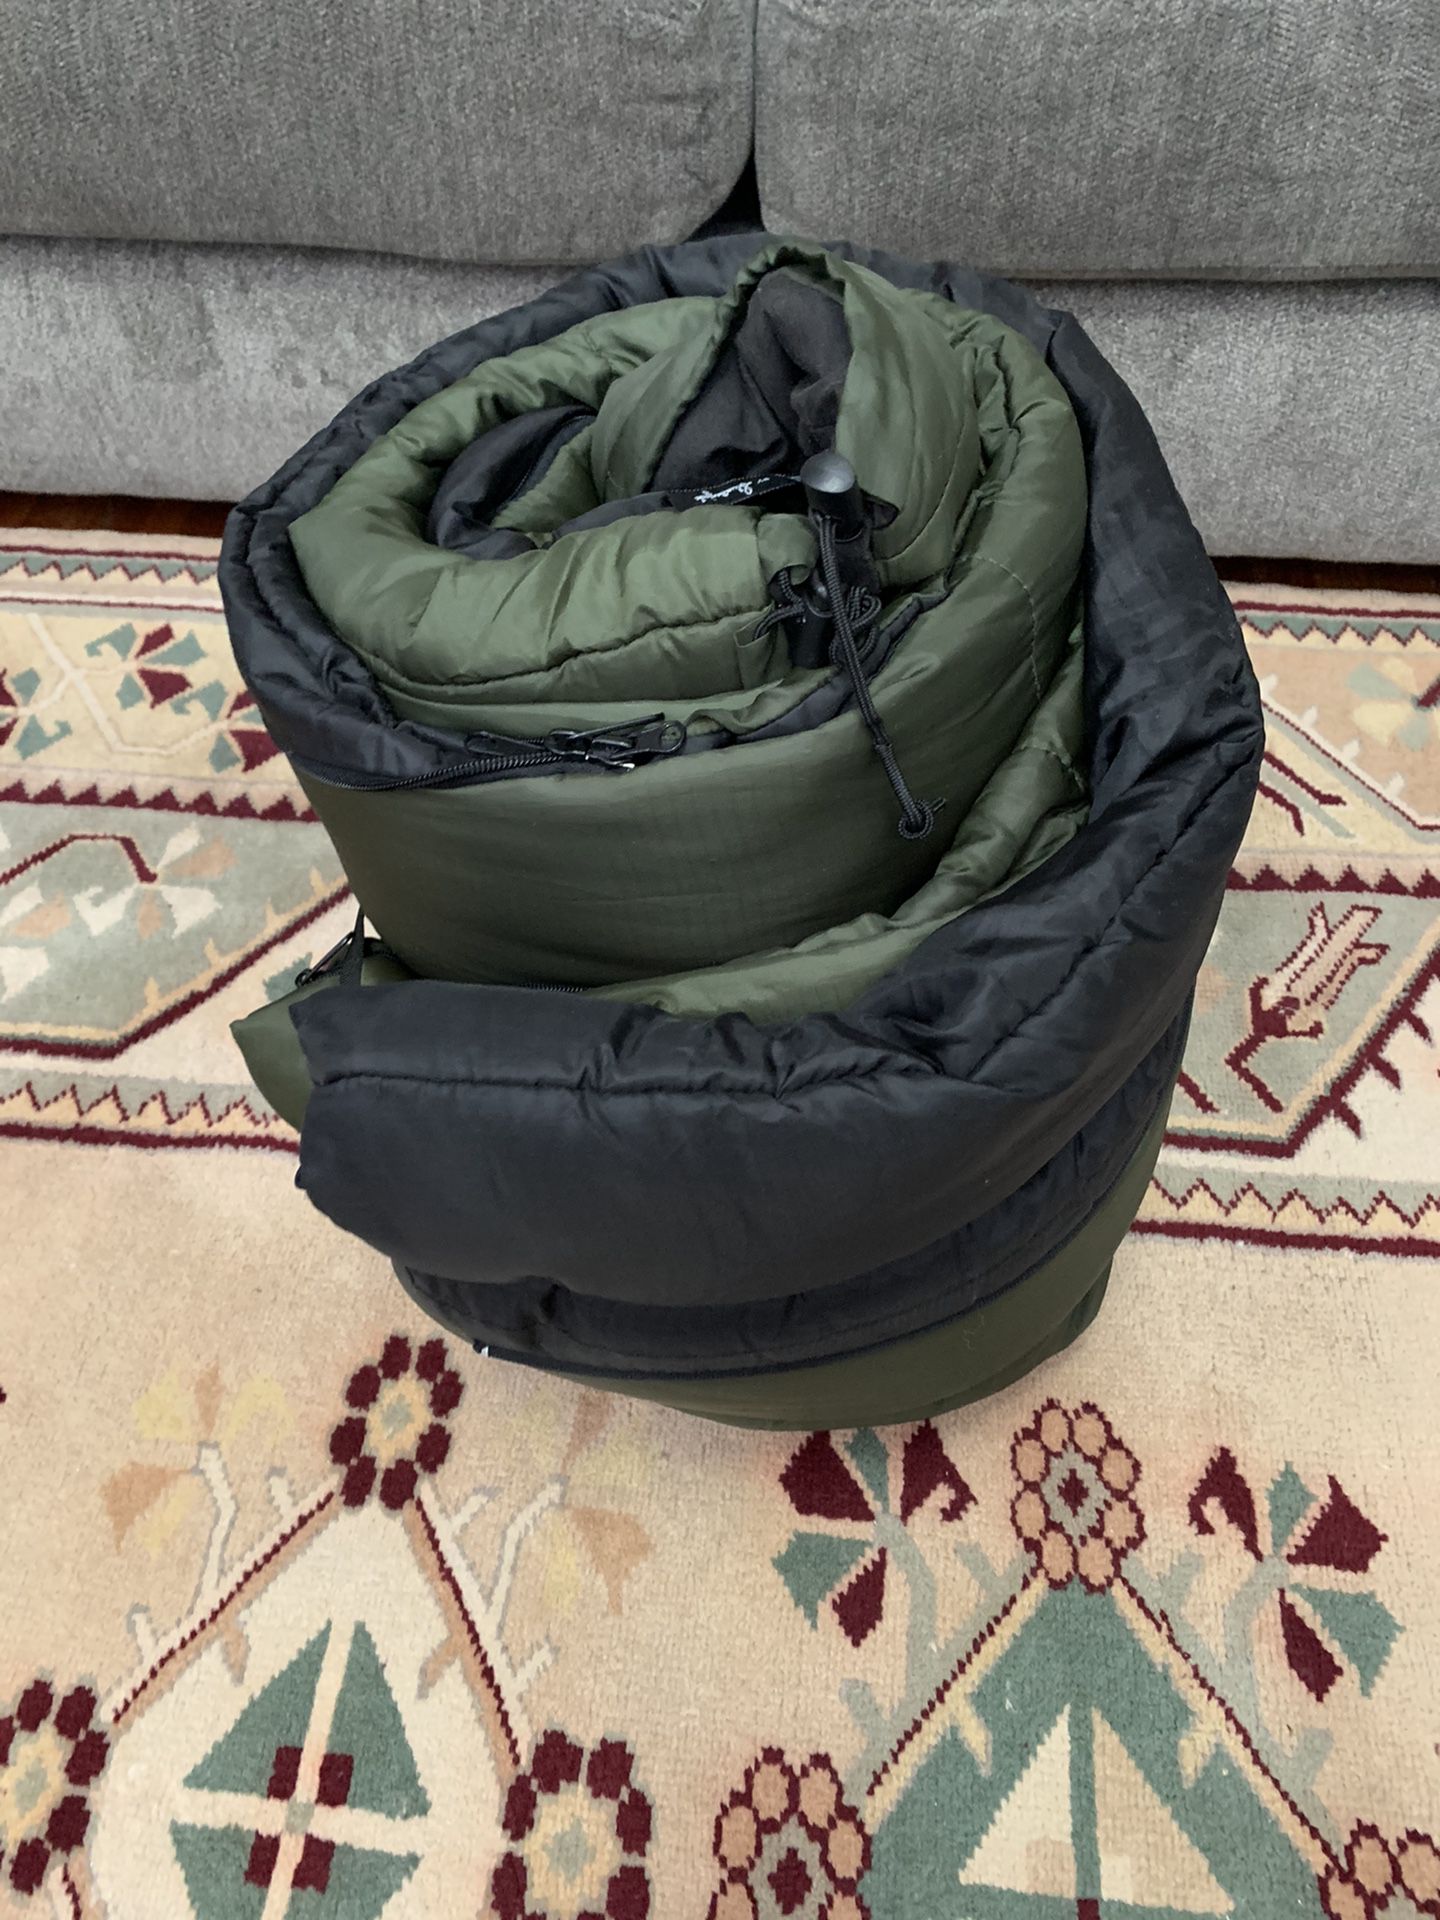 Everest Elite sleeping bag